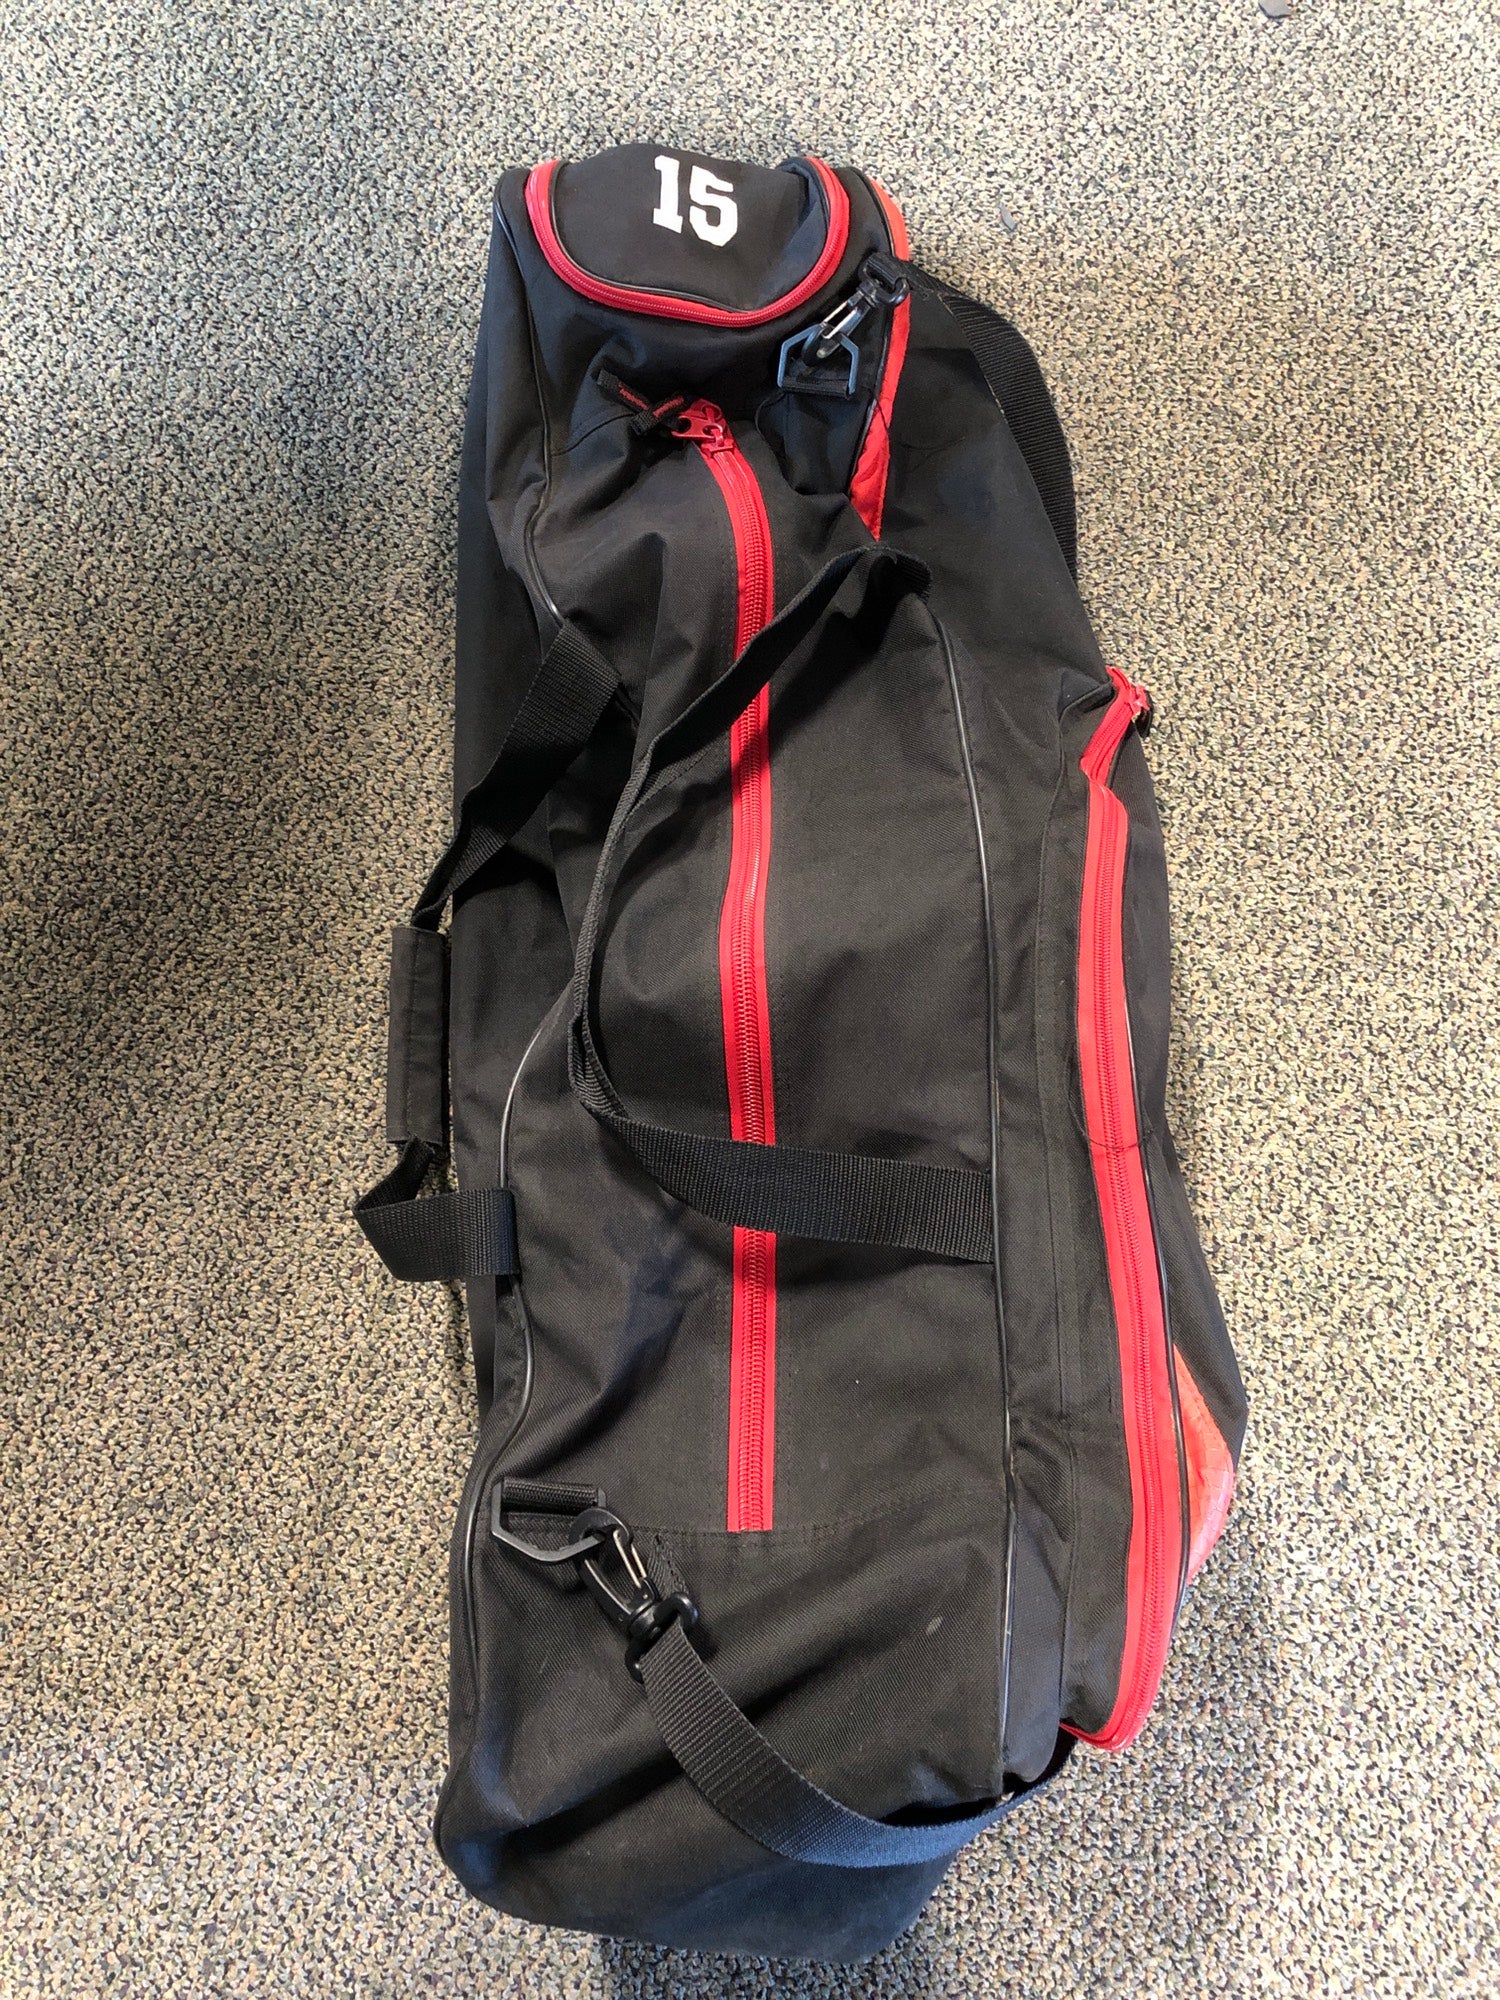 FS Baseball Player Equipment Bag - Black | Walmart Canada